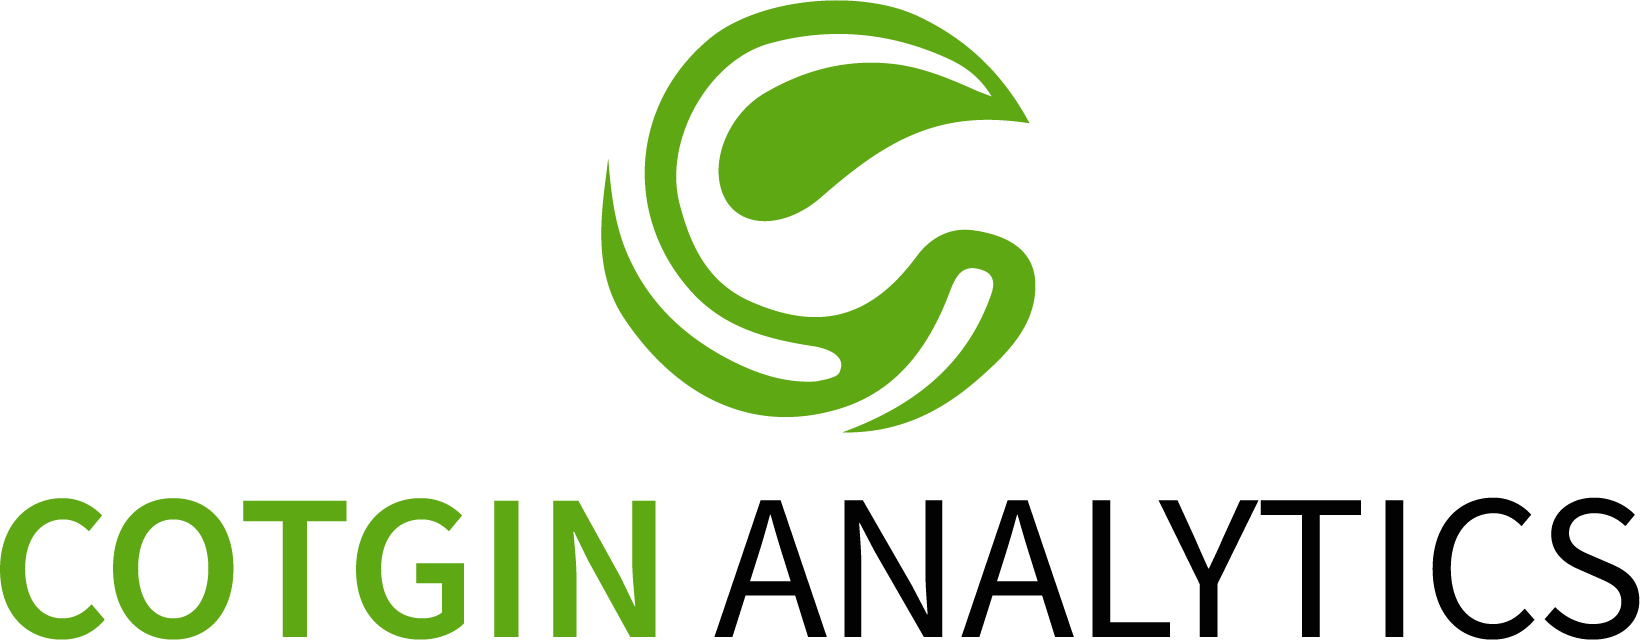 Cotgin Analytics Logo